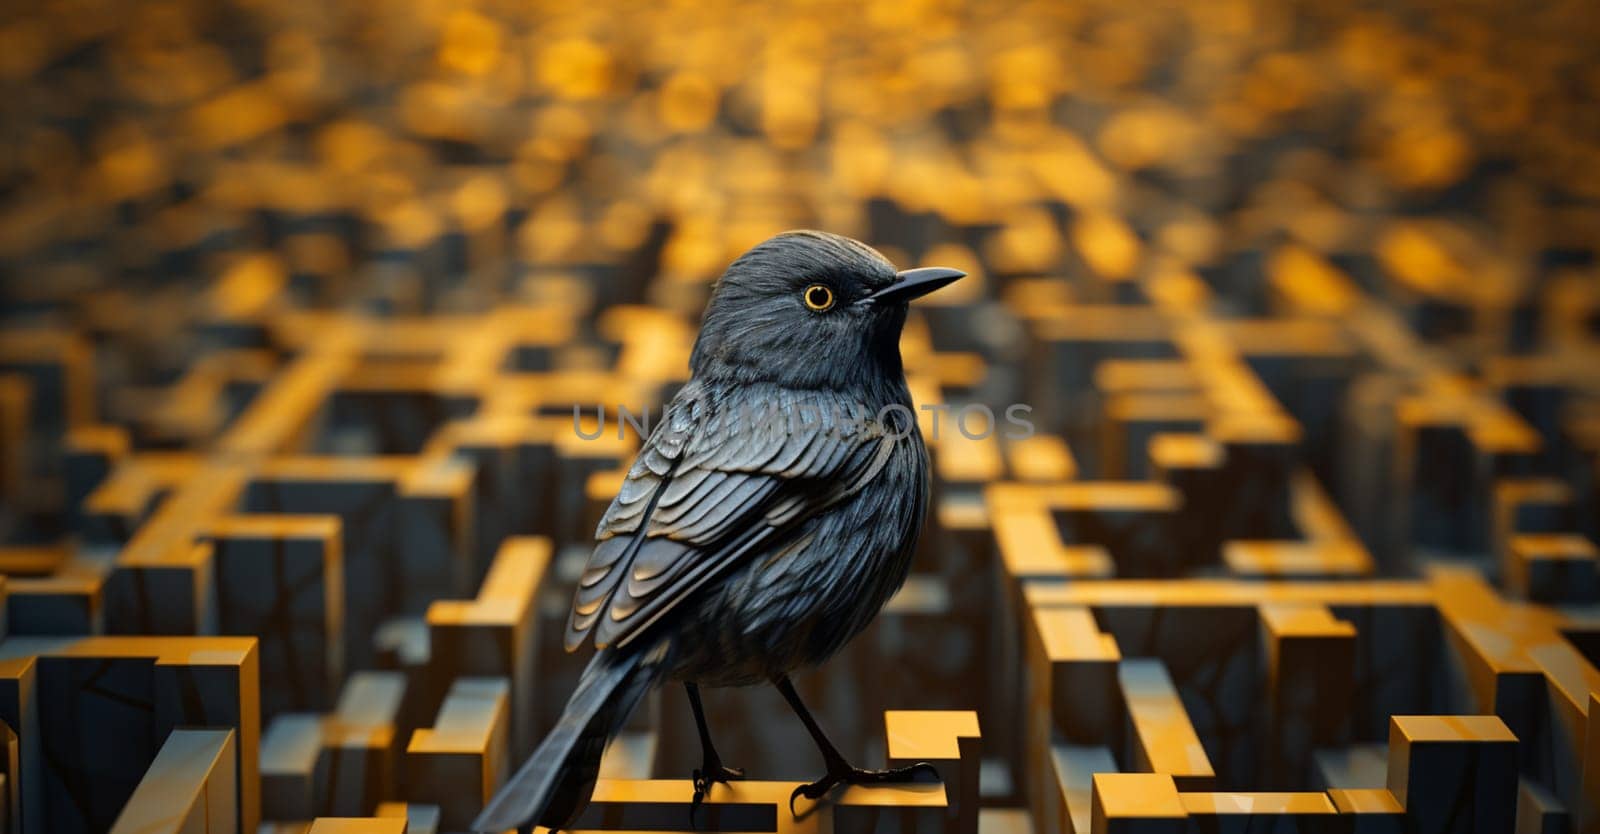 4k bird photo,4k sparrow photo,Cute bird by Andelov13